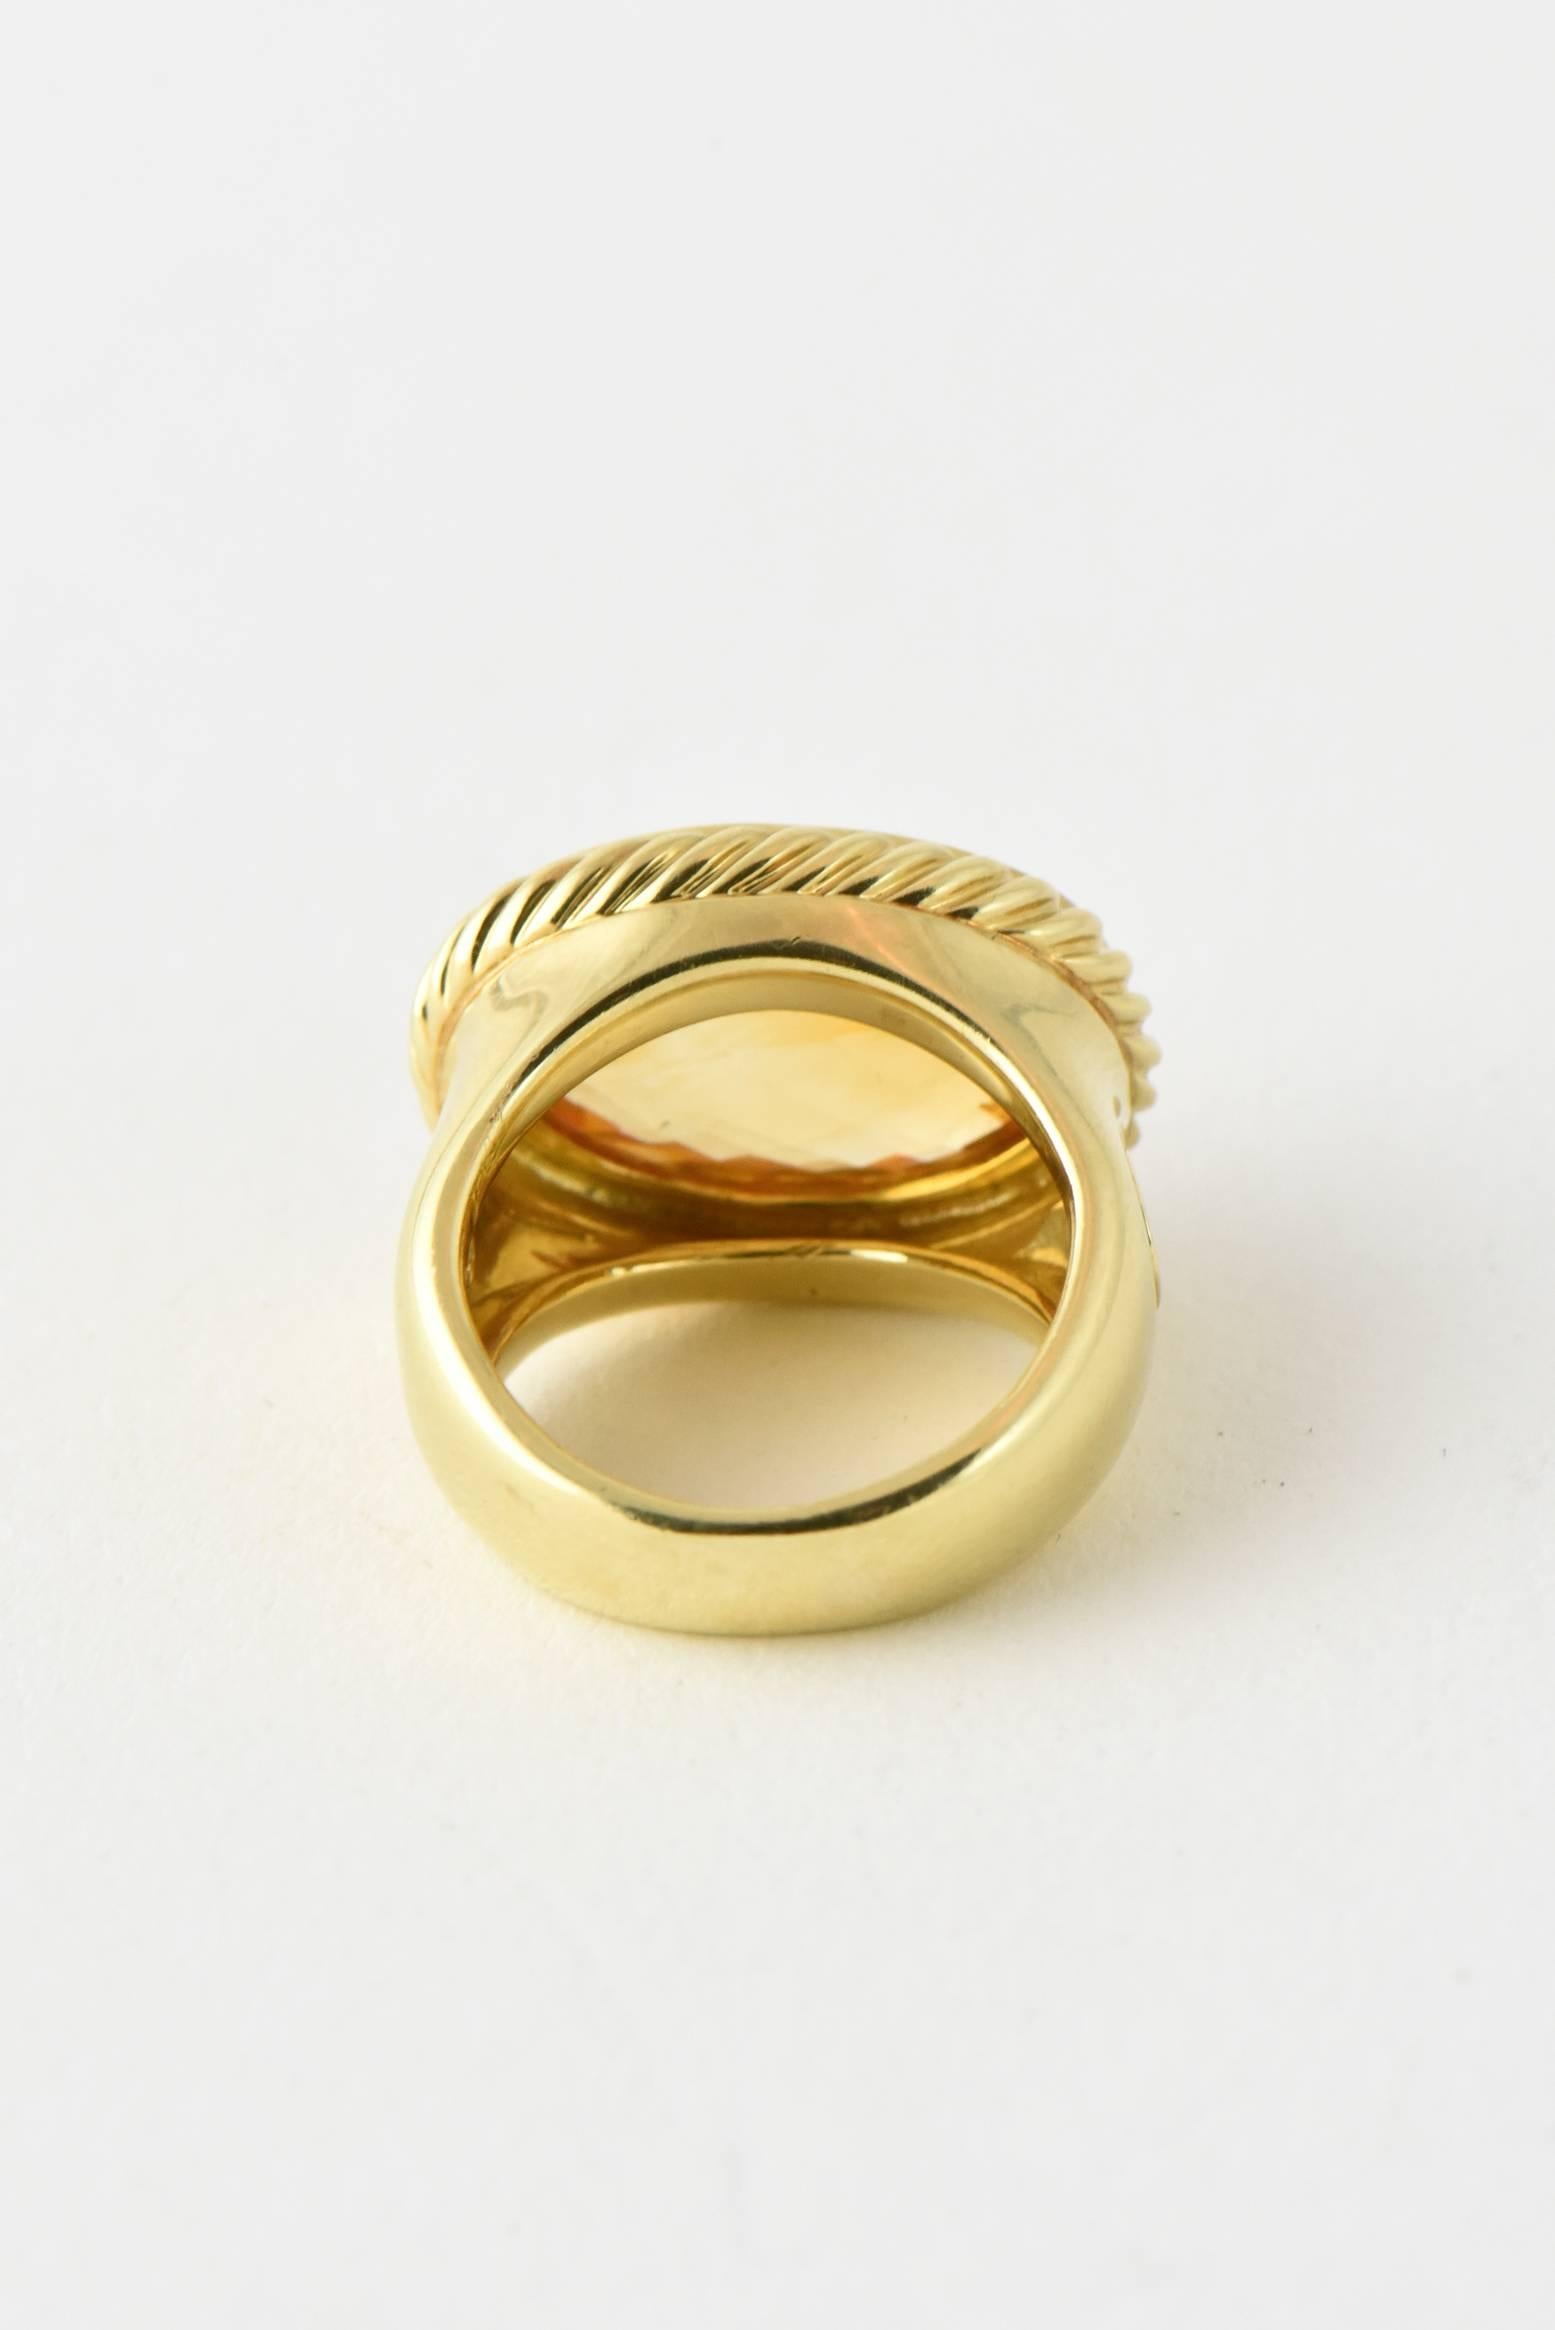 Yurman Citrine Signature Gold Ring For Sale 1